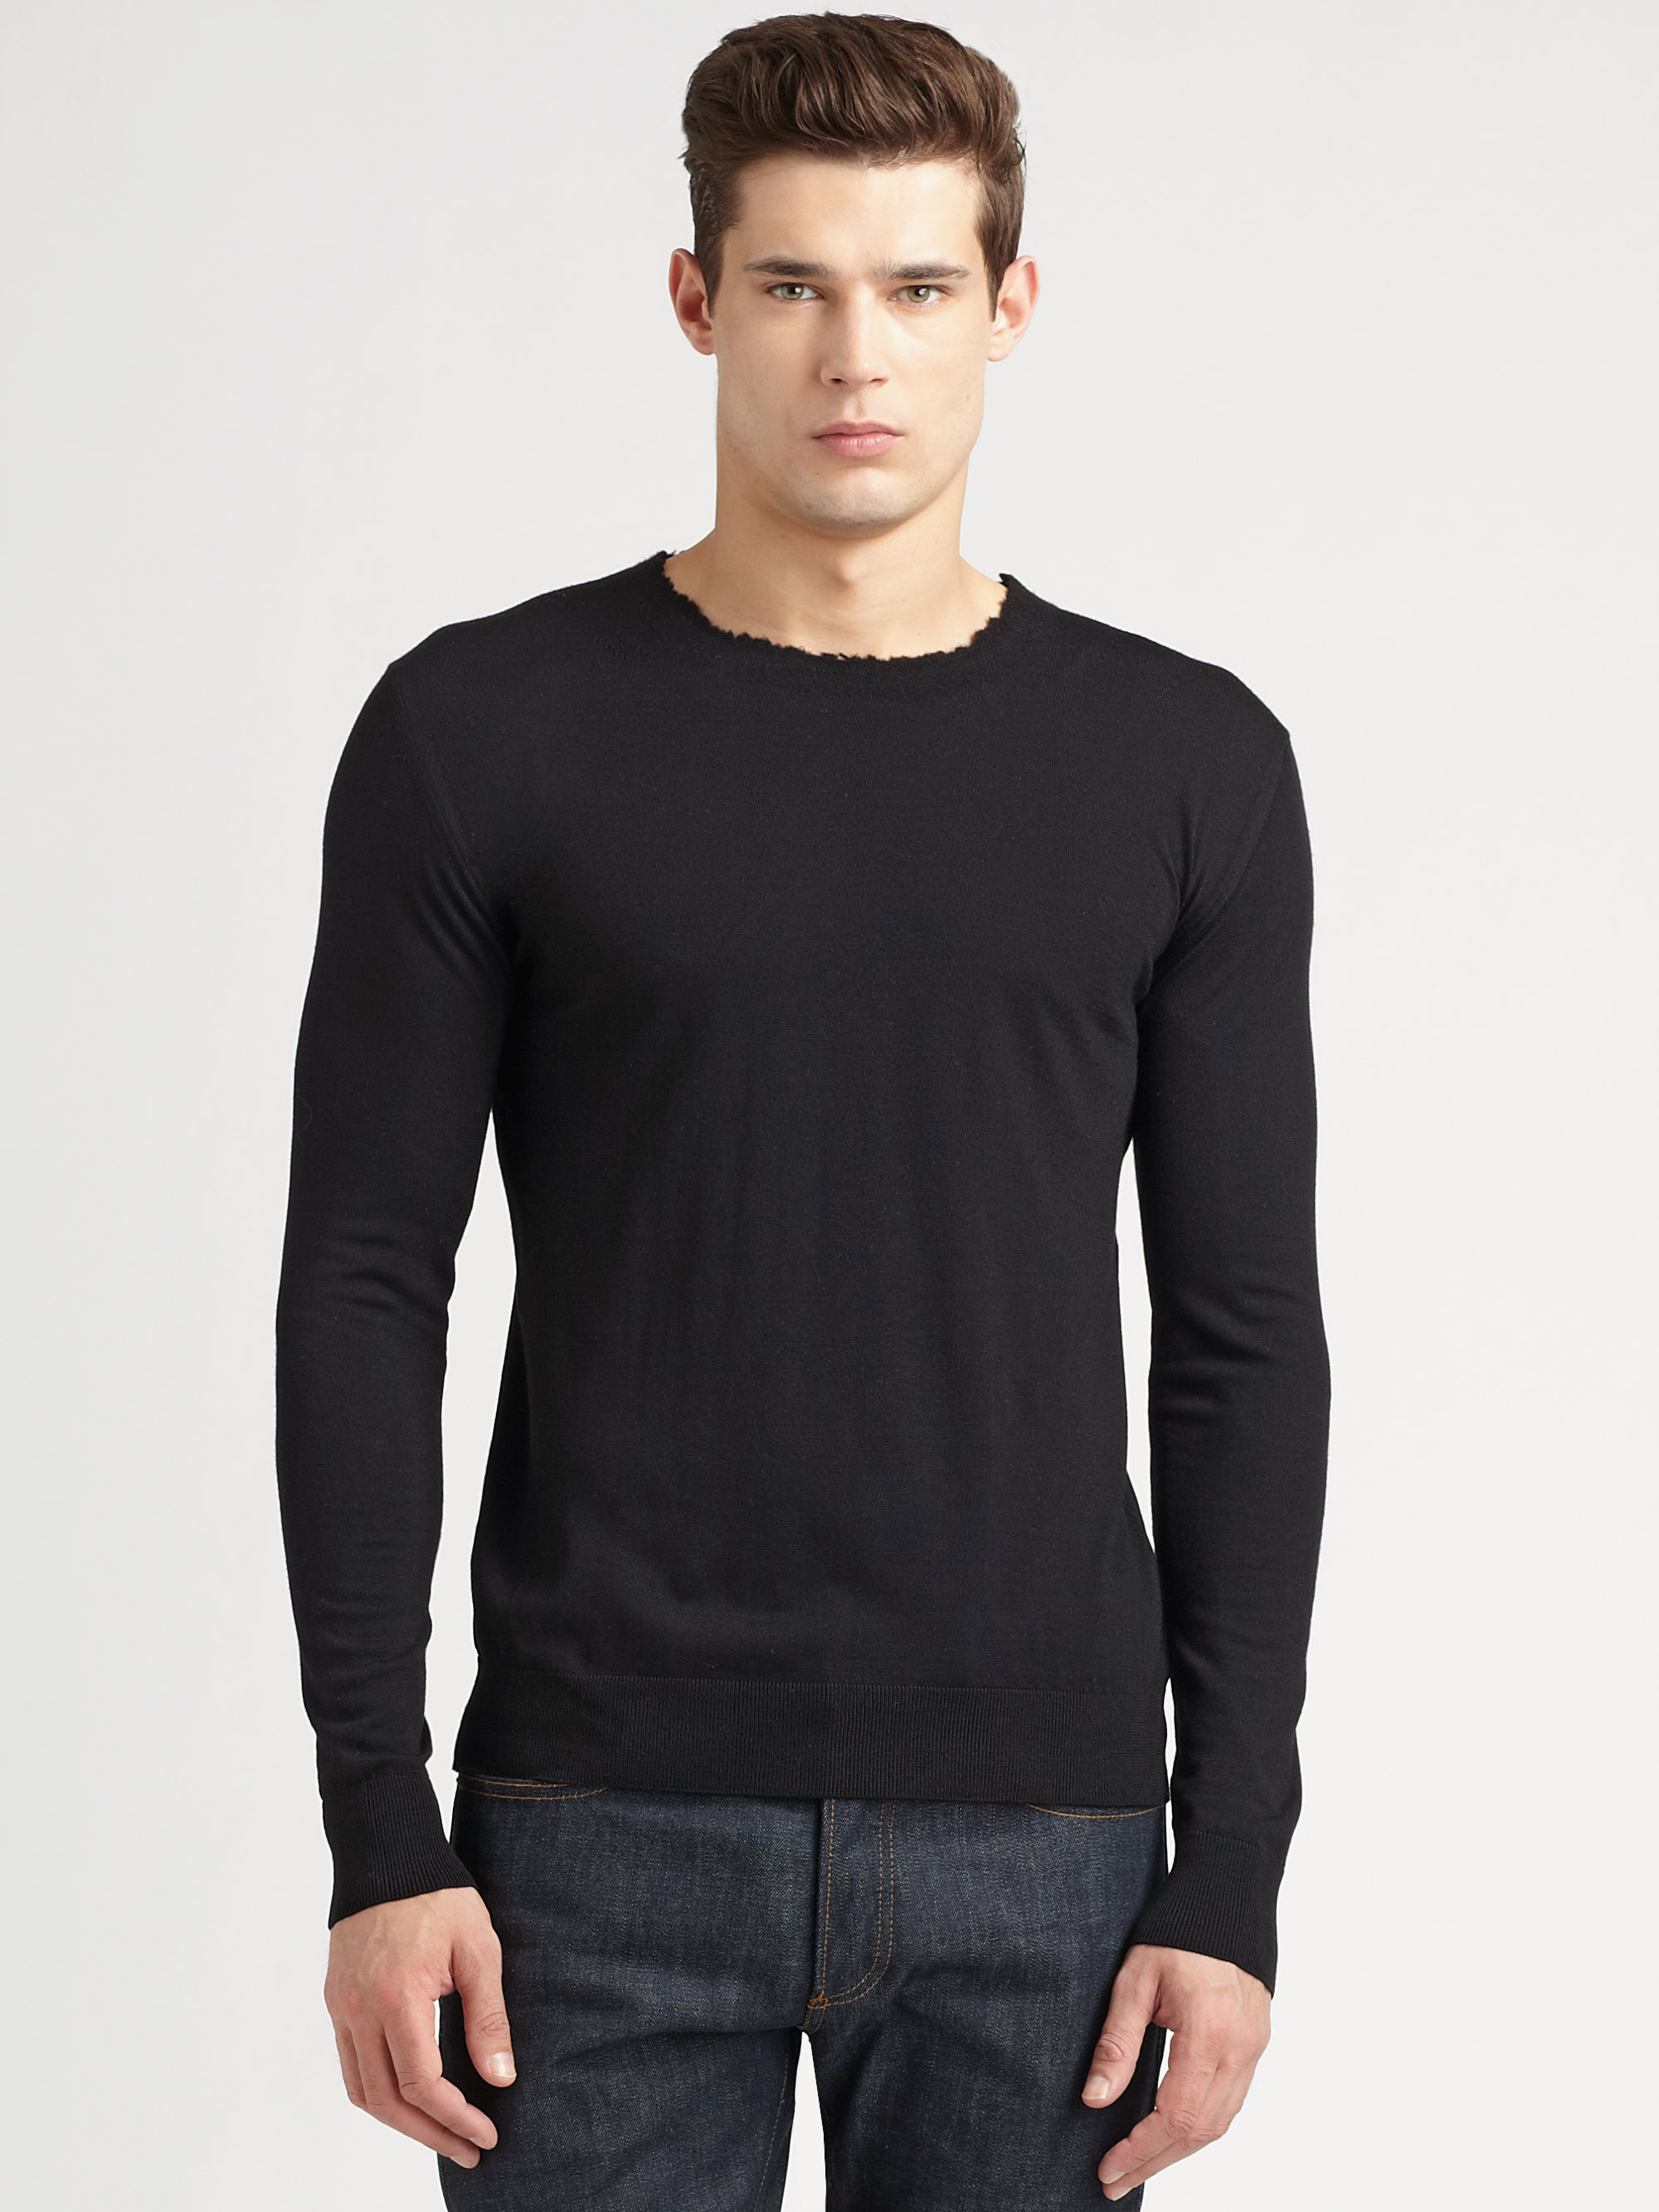 Dior homme Boilded Wool Sweater in Black for Men | Lyst